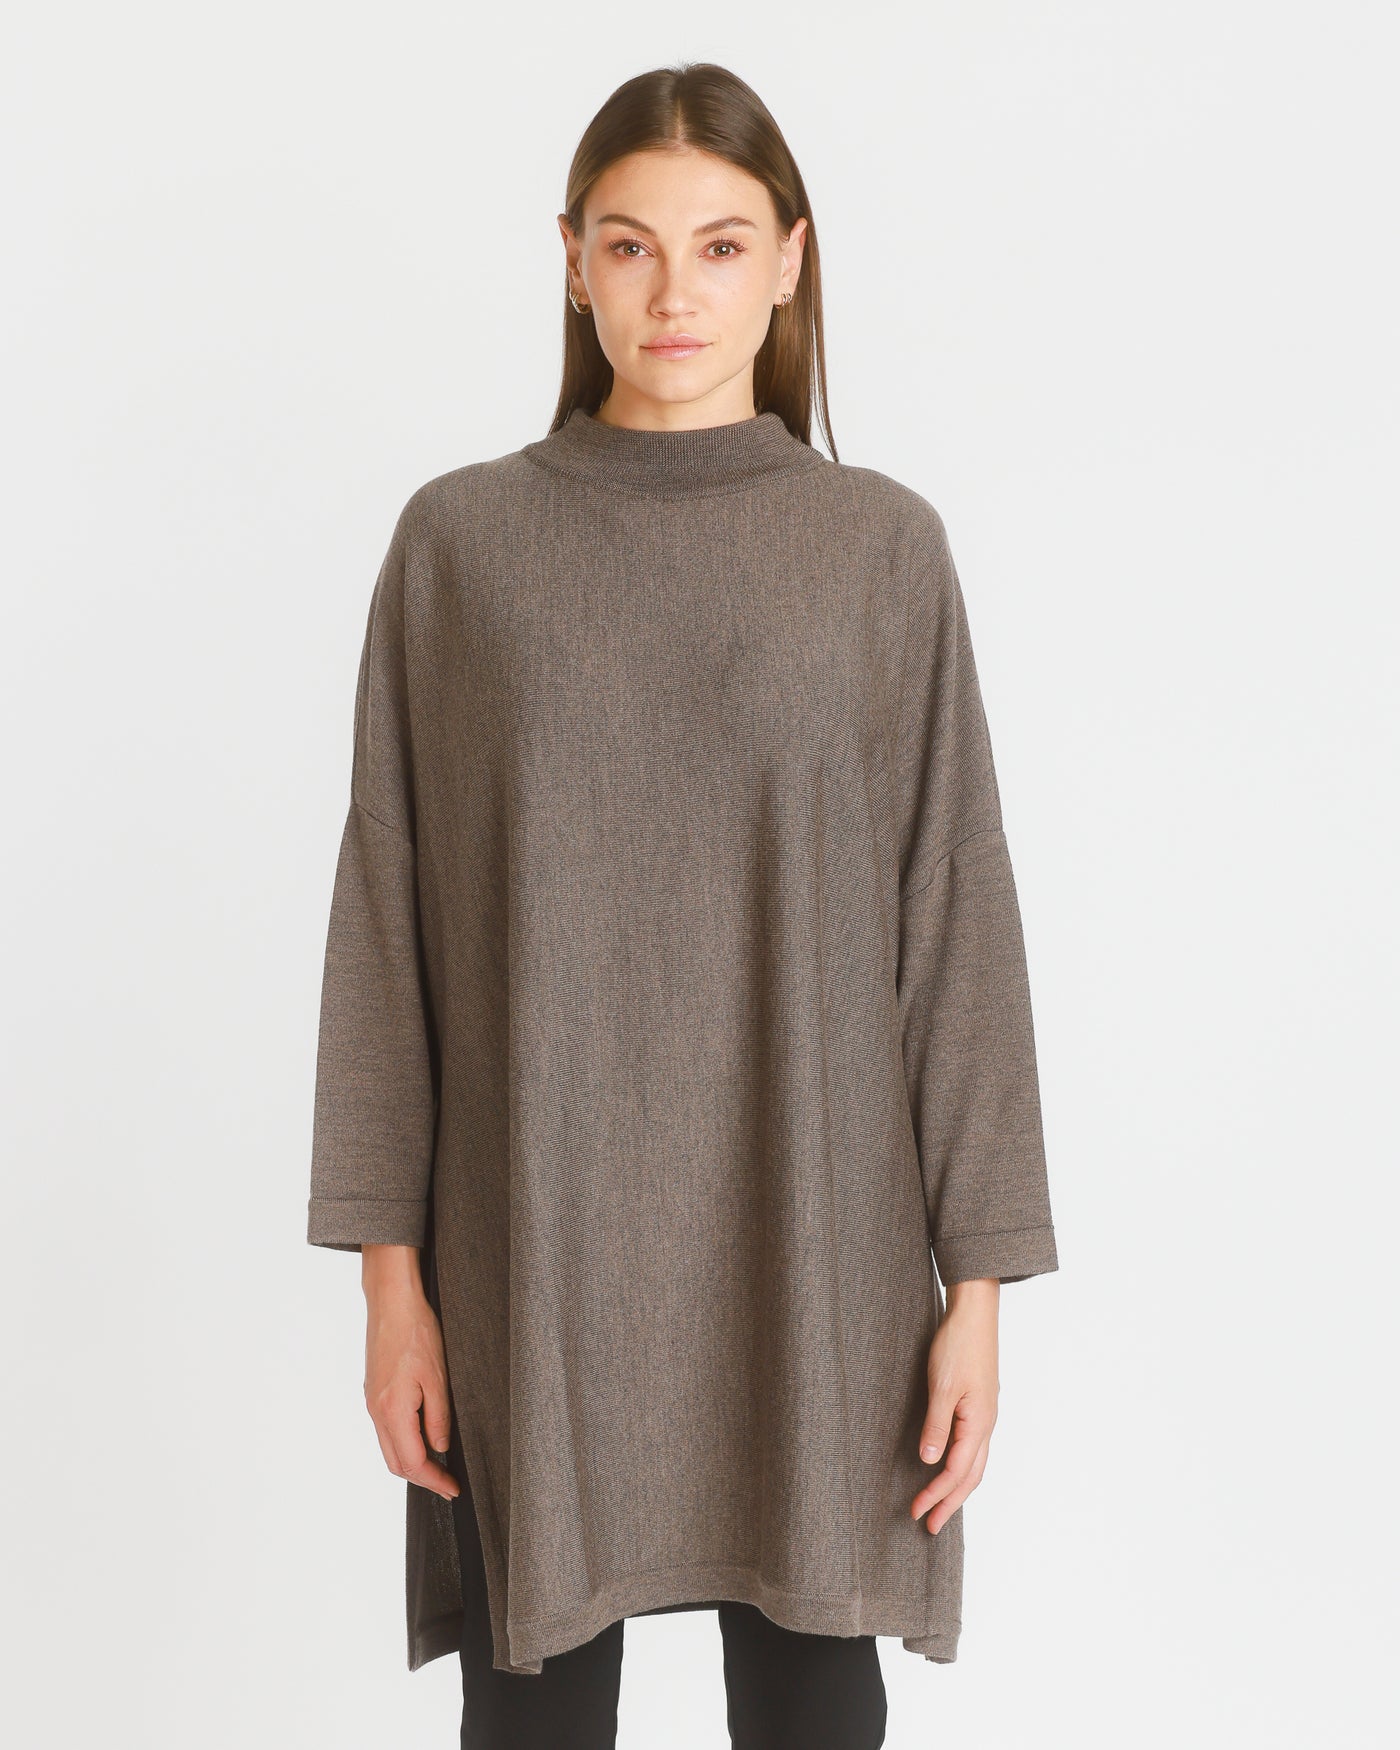 Vilna  Merino Sweater Tunic. Taupe. One Size